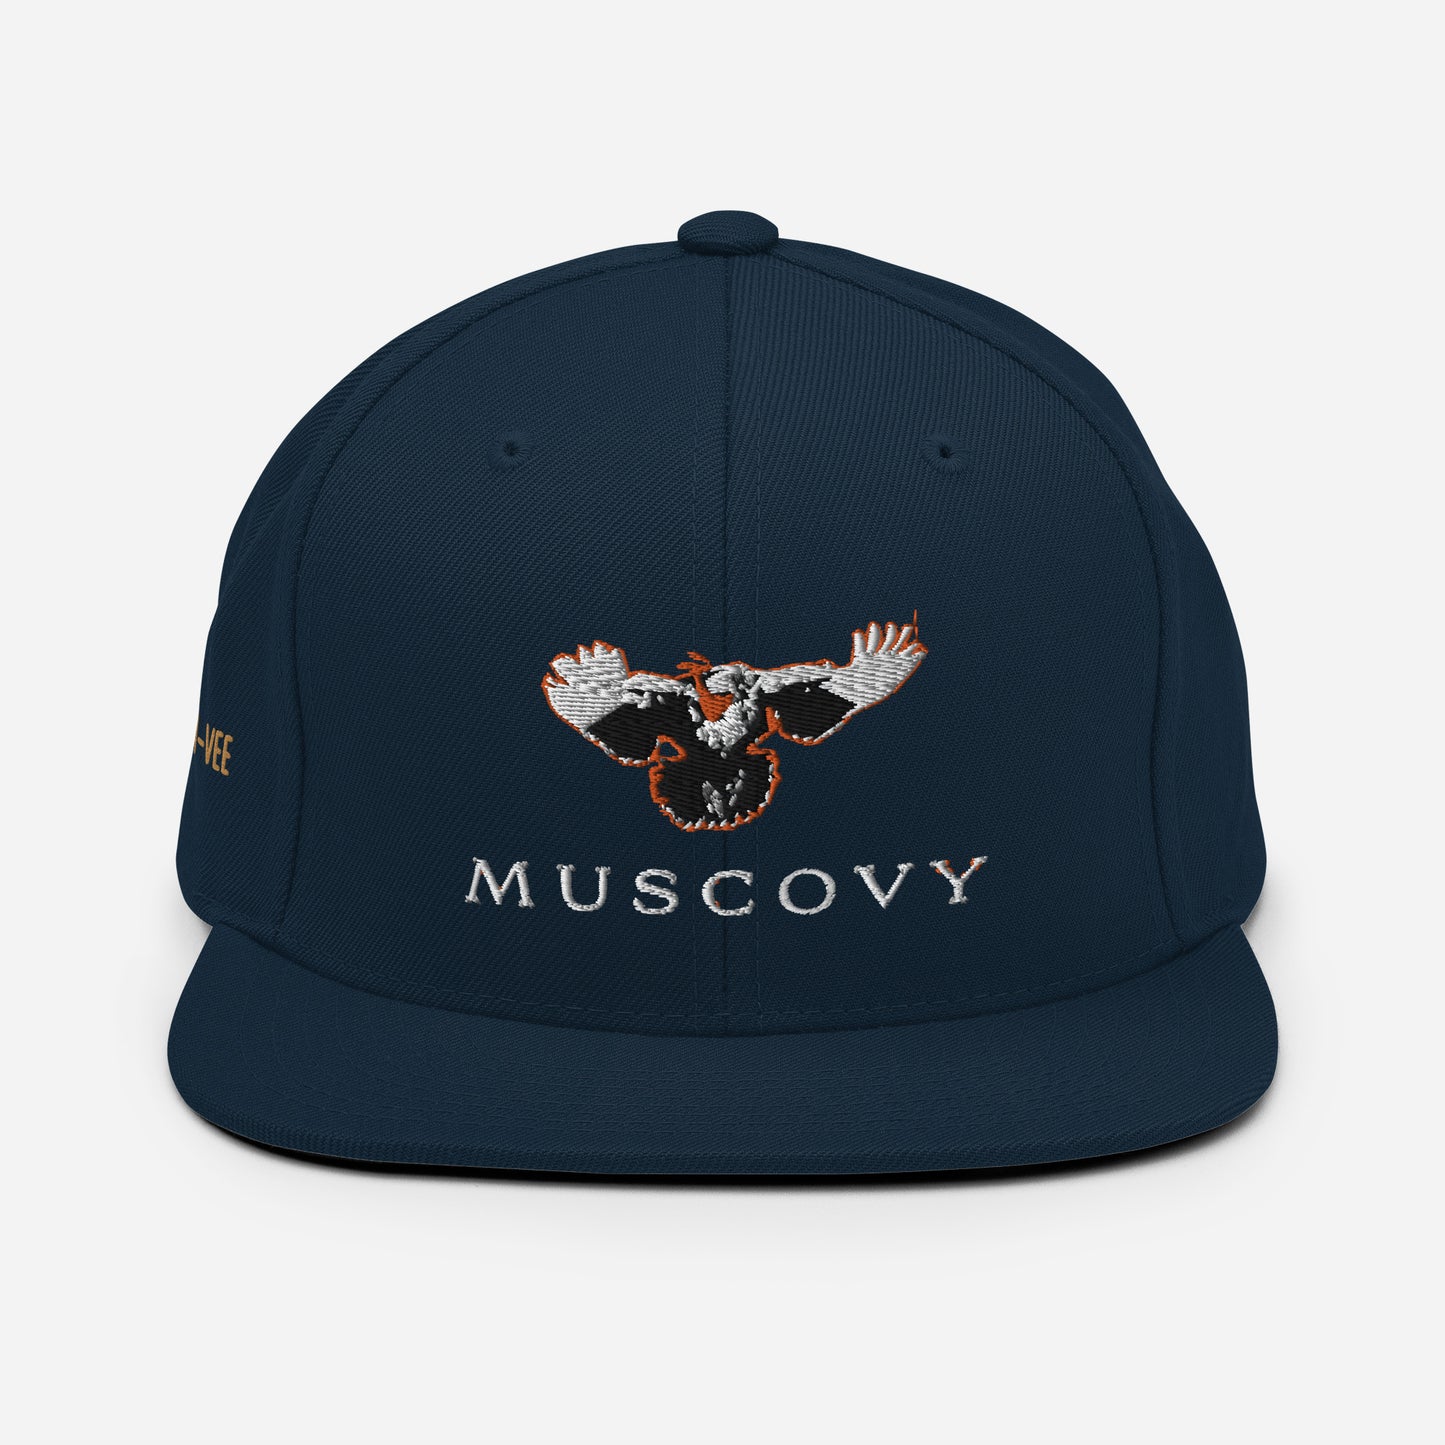 Muscovy Snapback Hat